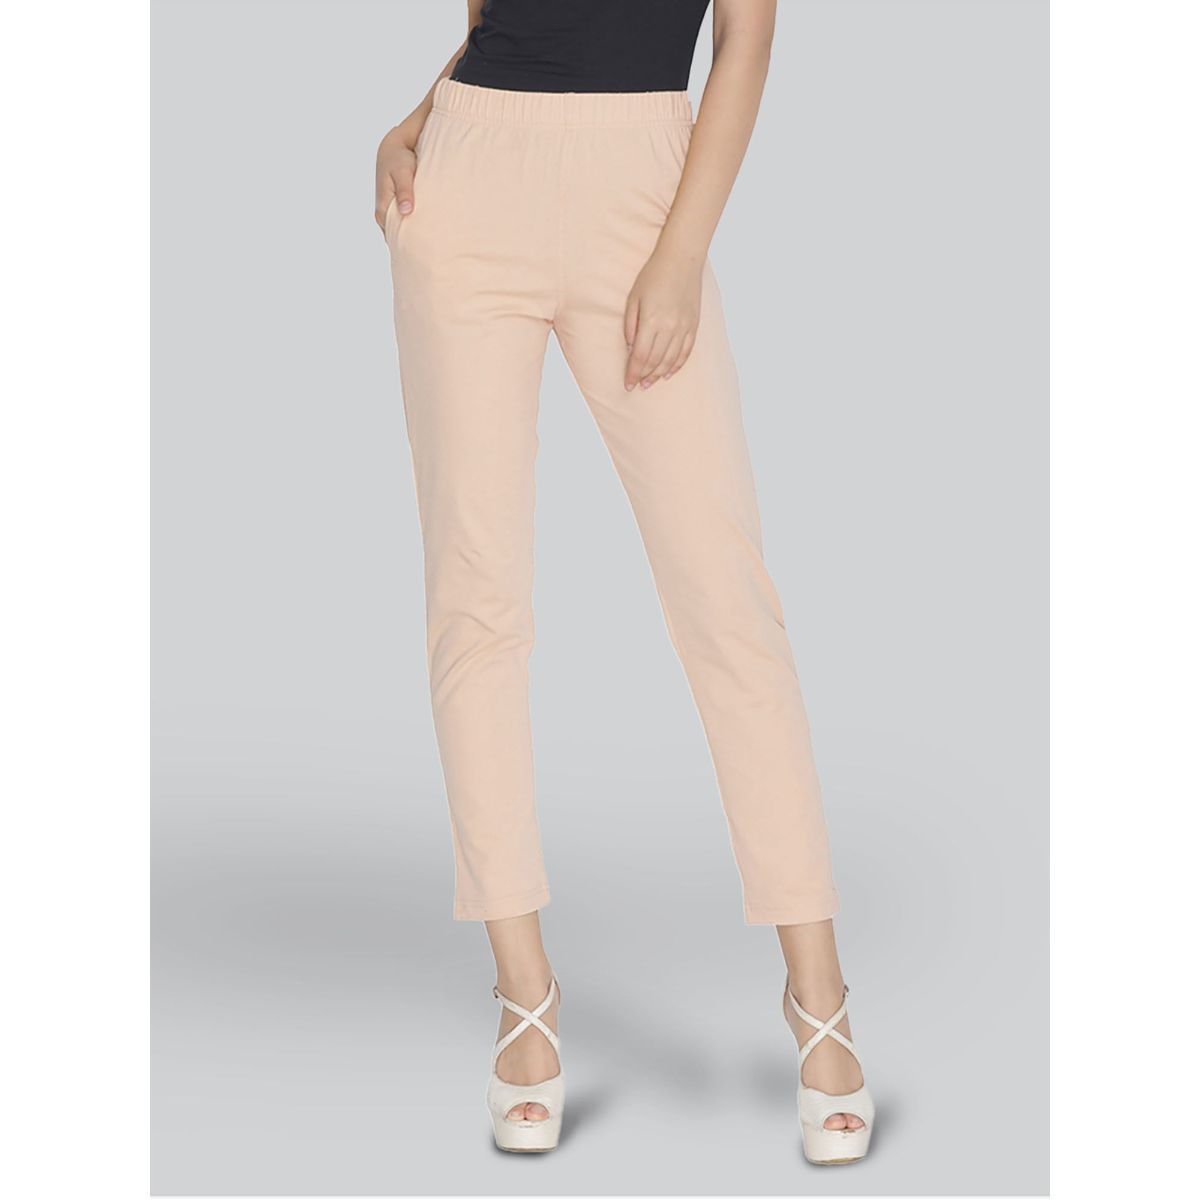 Lyra Pants  Buy Lyra Solid Coloured Free Size Kurti Pant for WomenYellow  Online  Nykaa Fashion